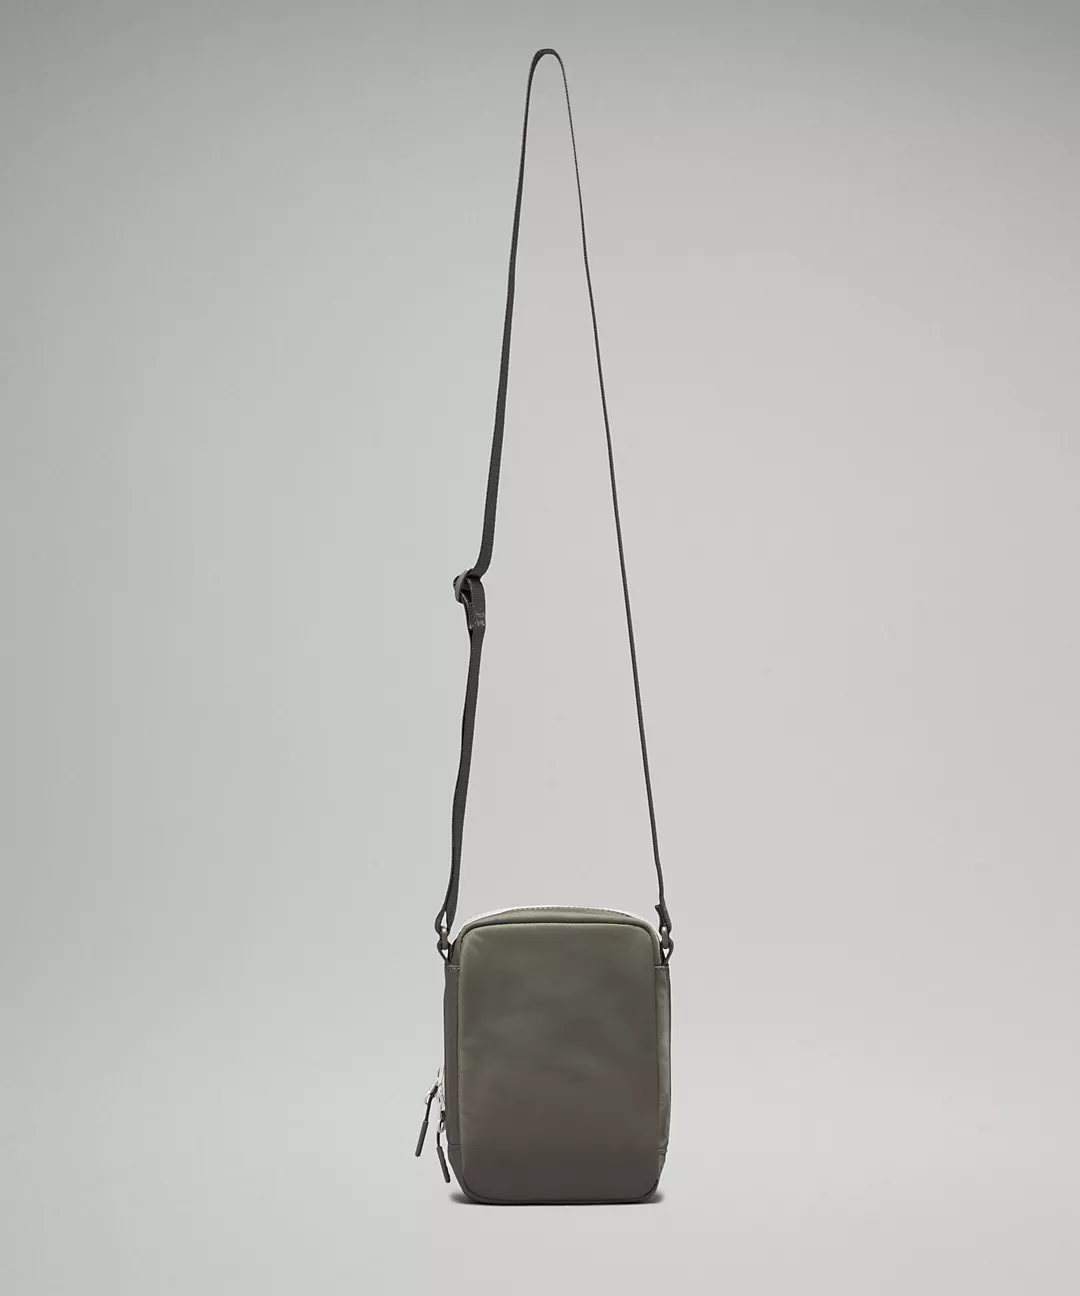 Single Shoulder Bag Mini Crossbody Messenger Bags Promotional Custom Cross Body Handbags Men Women Phone Chest Bag